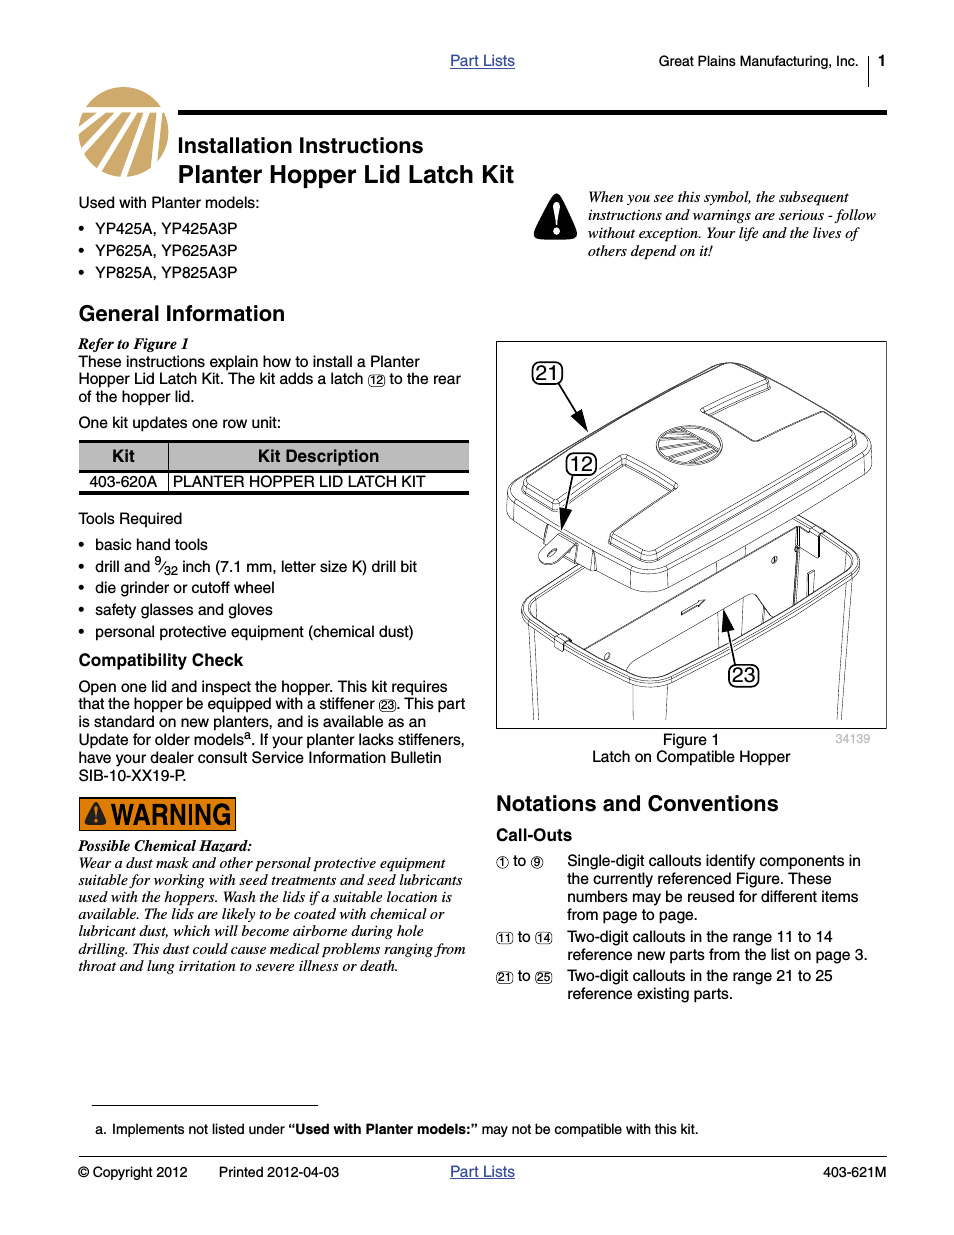 Planter Hopper Lid Latch Kit